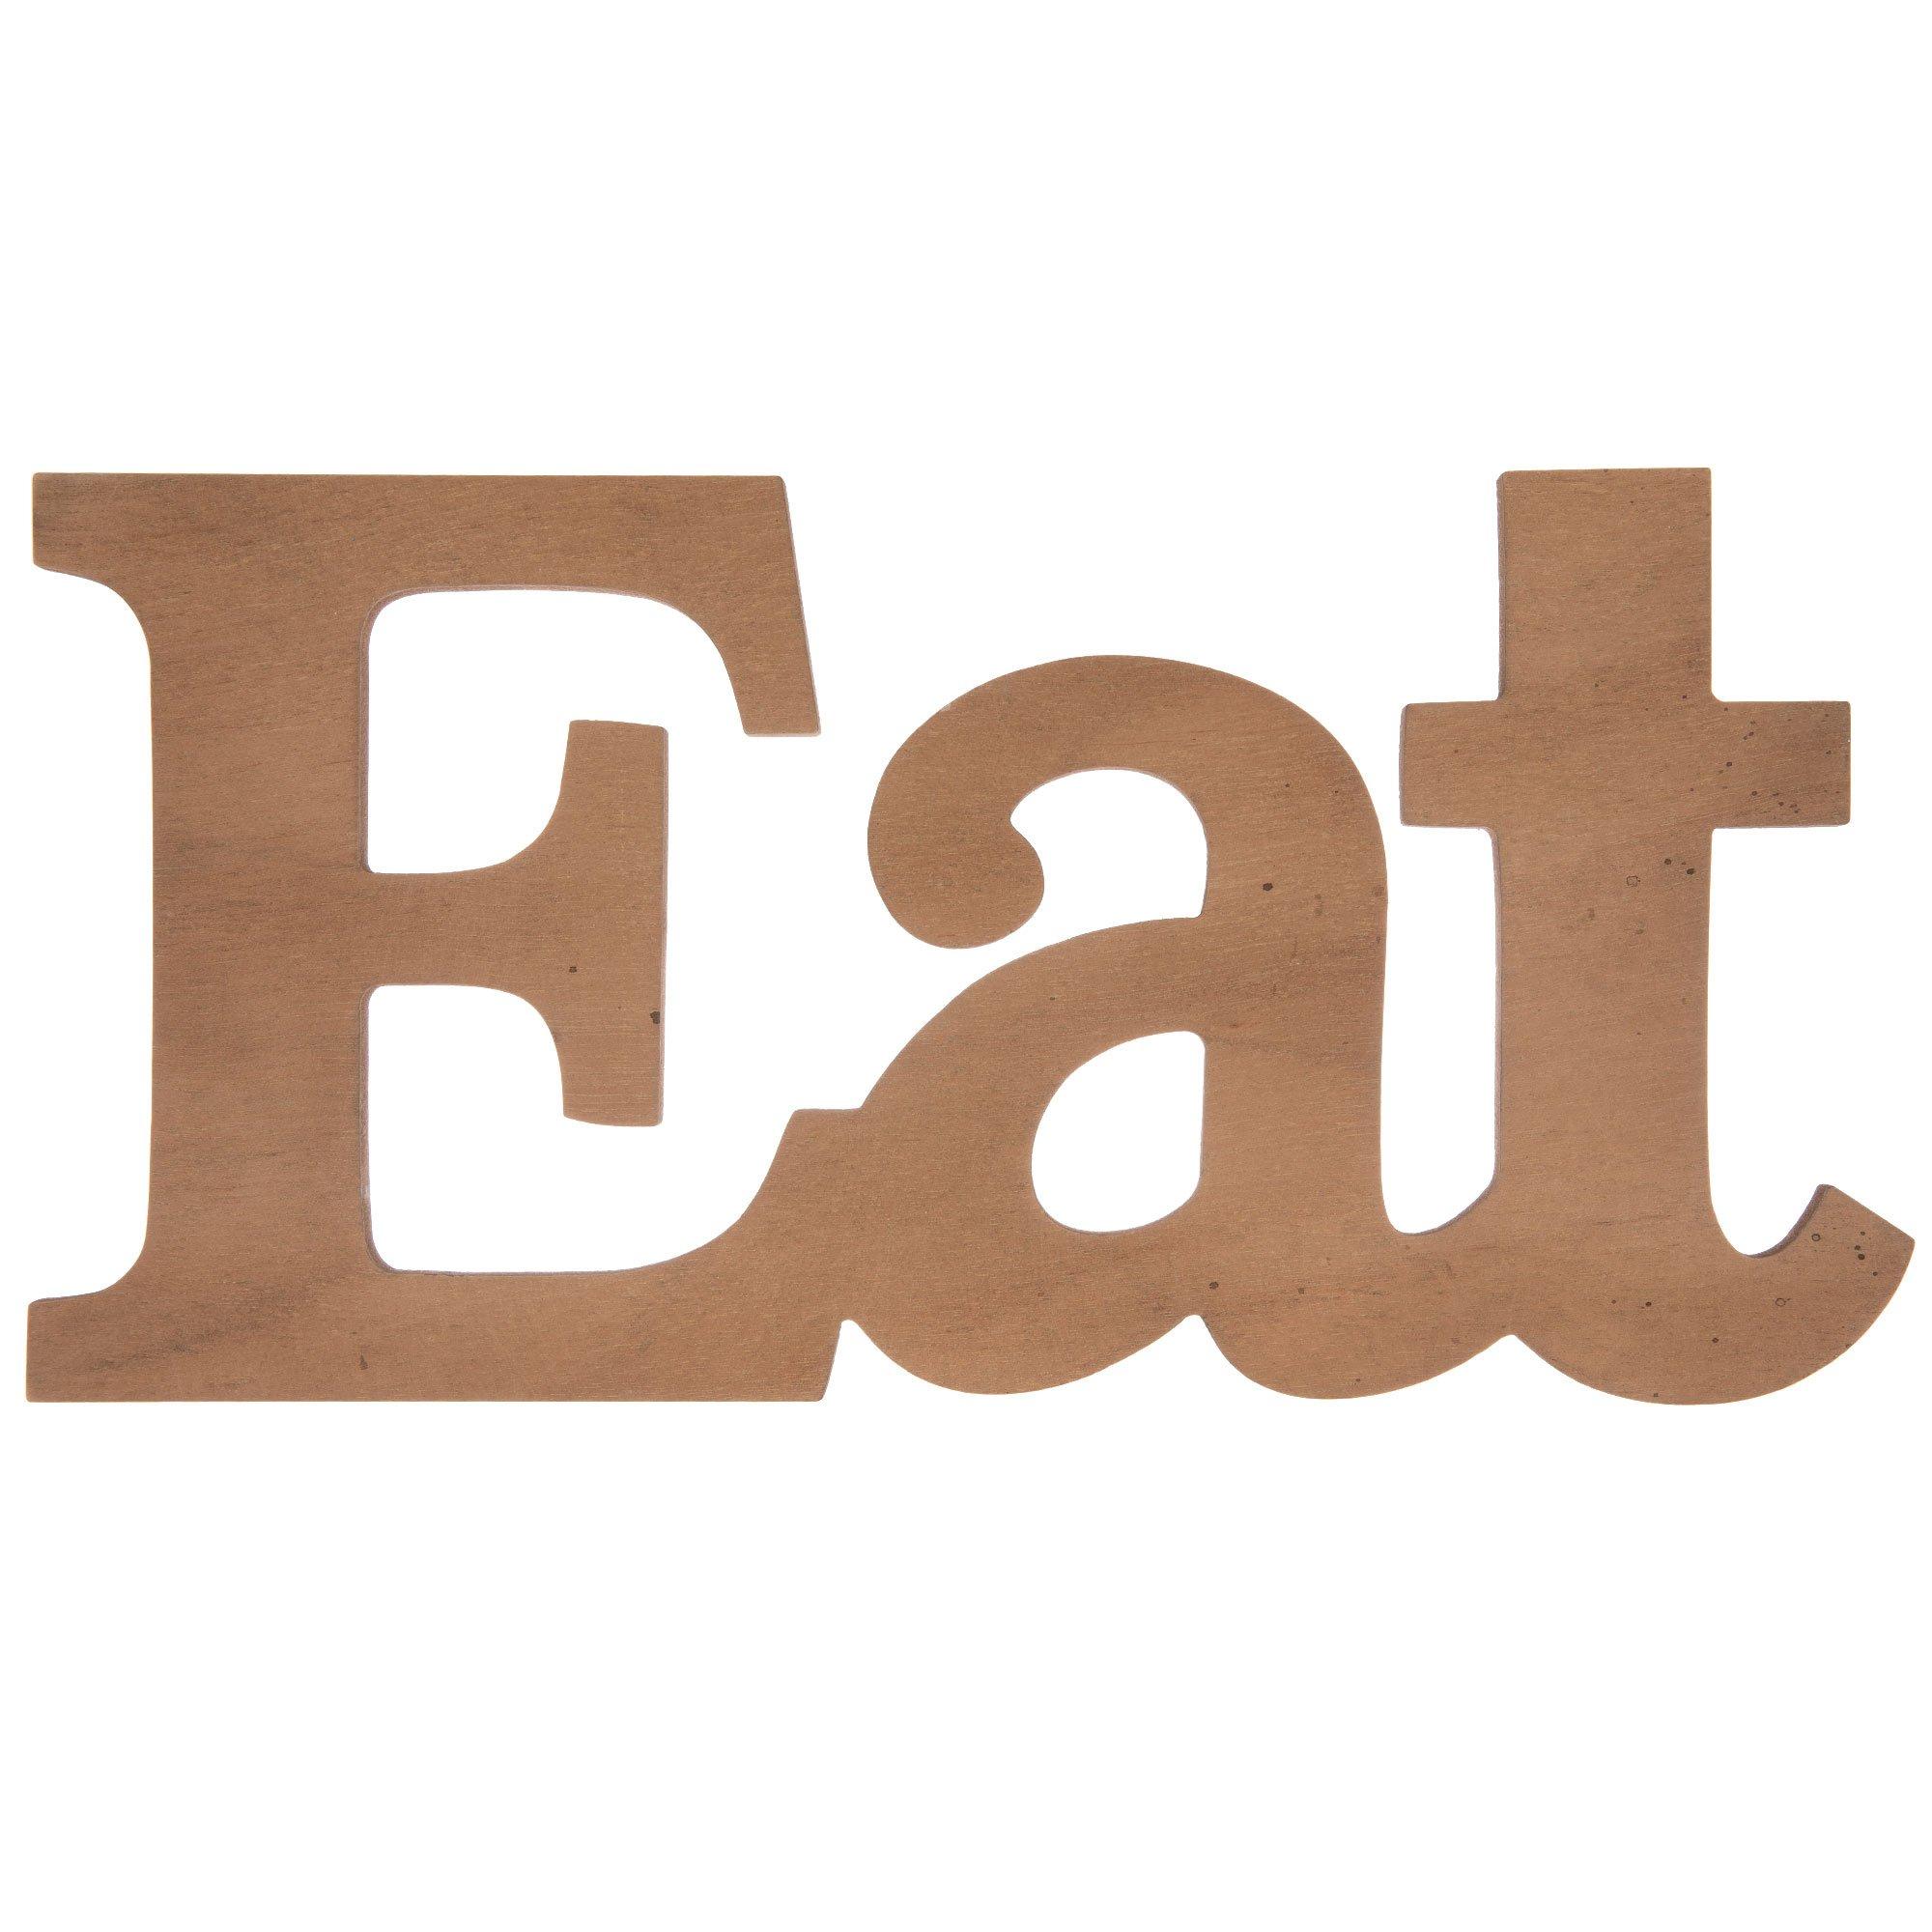 eat word